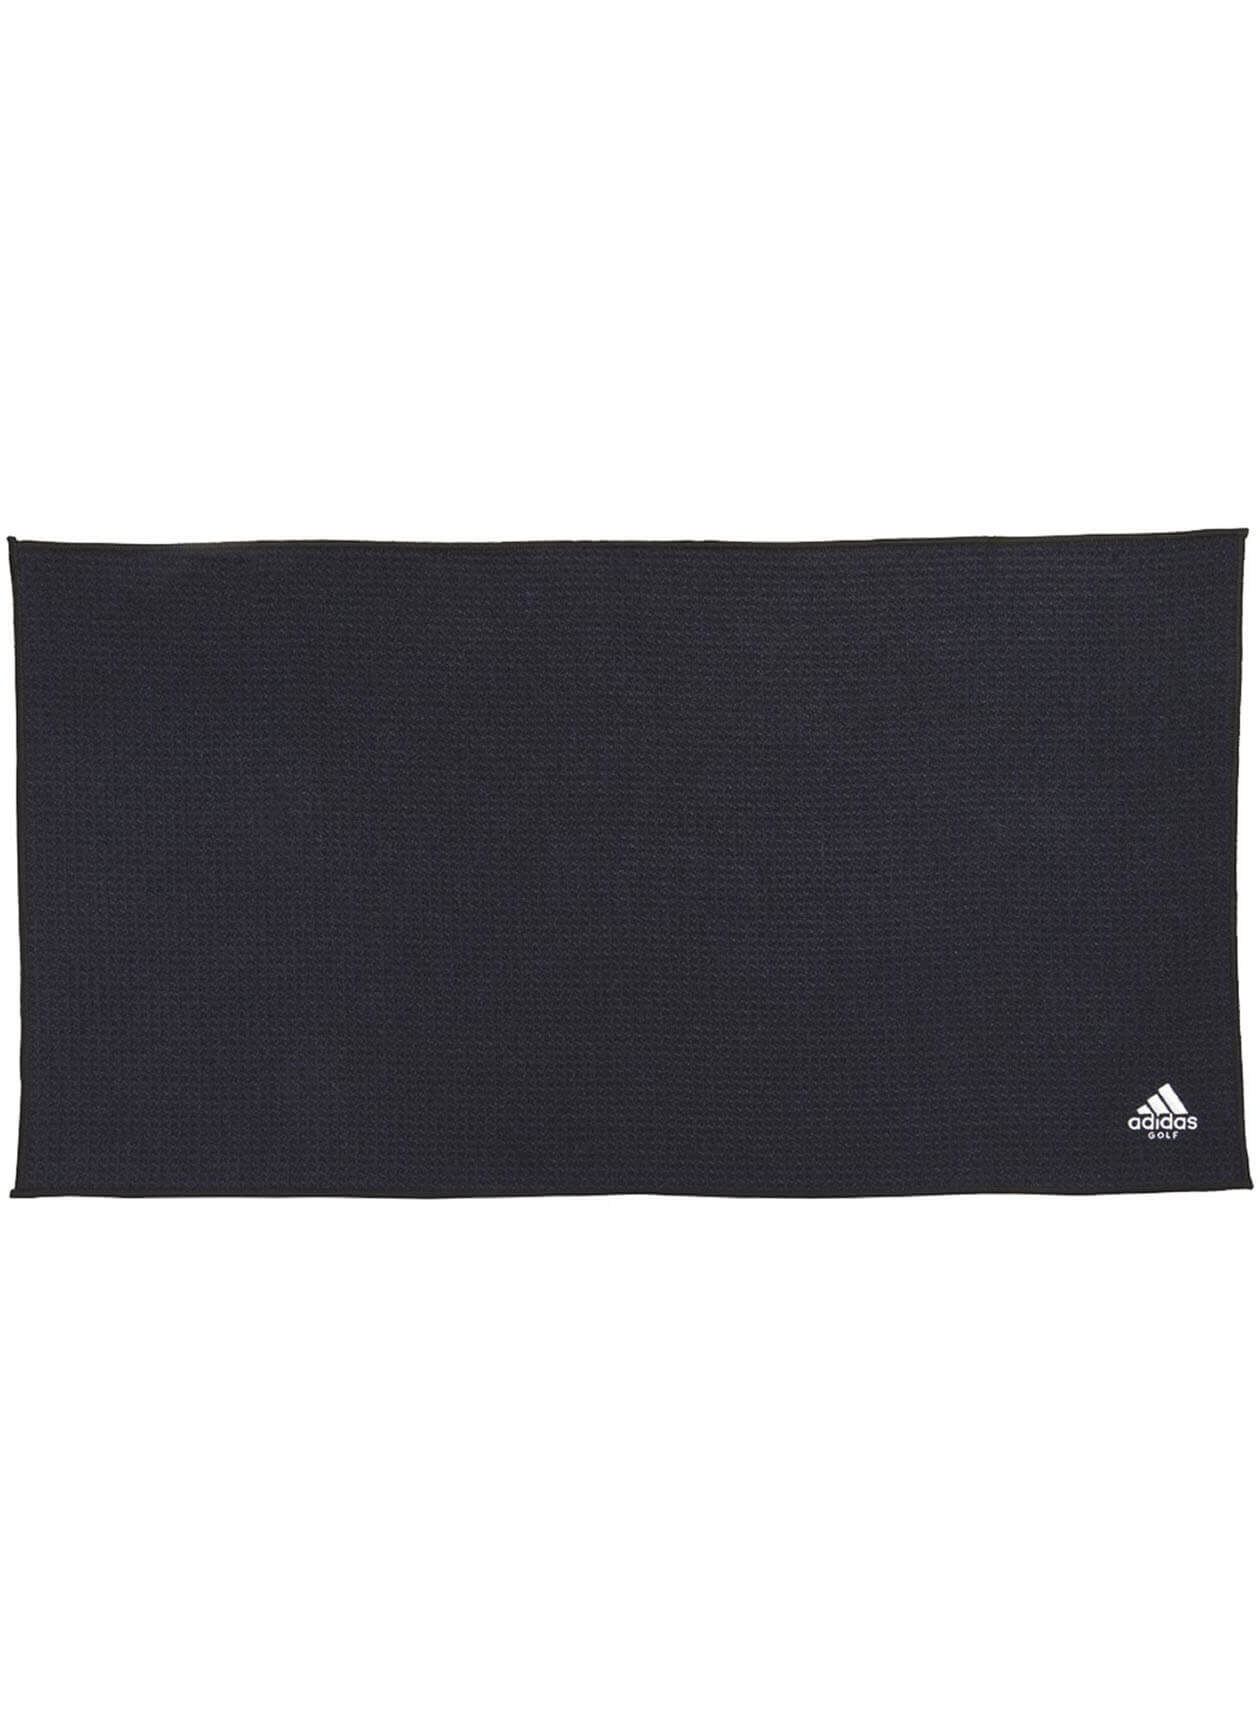 Adidas AD309 - Golf Microfiber Players Towel